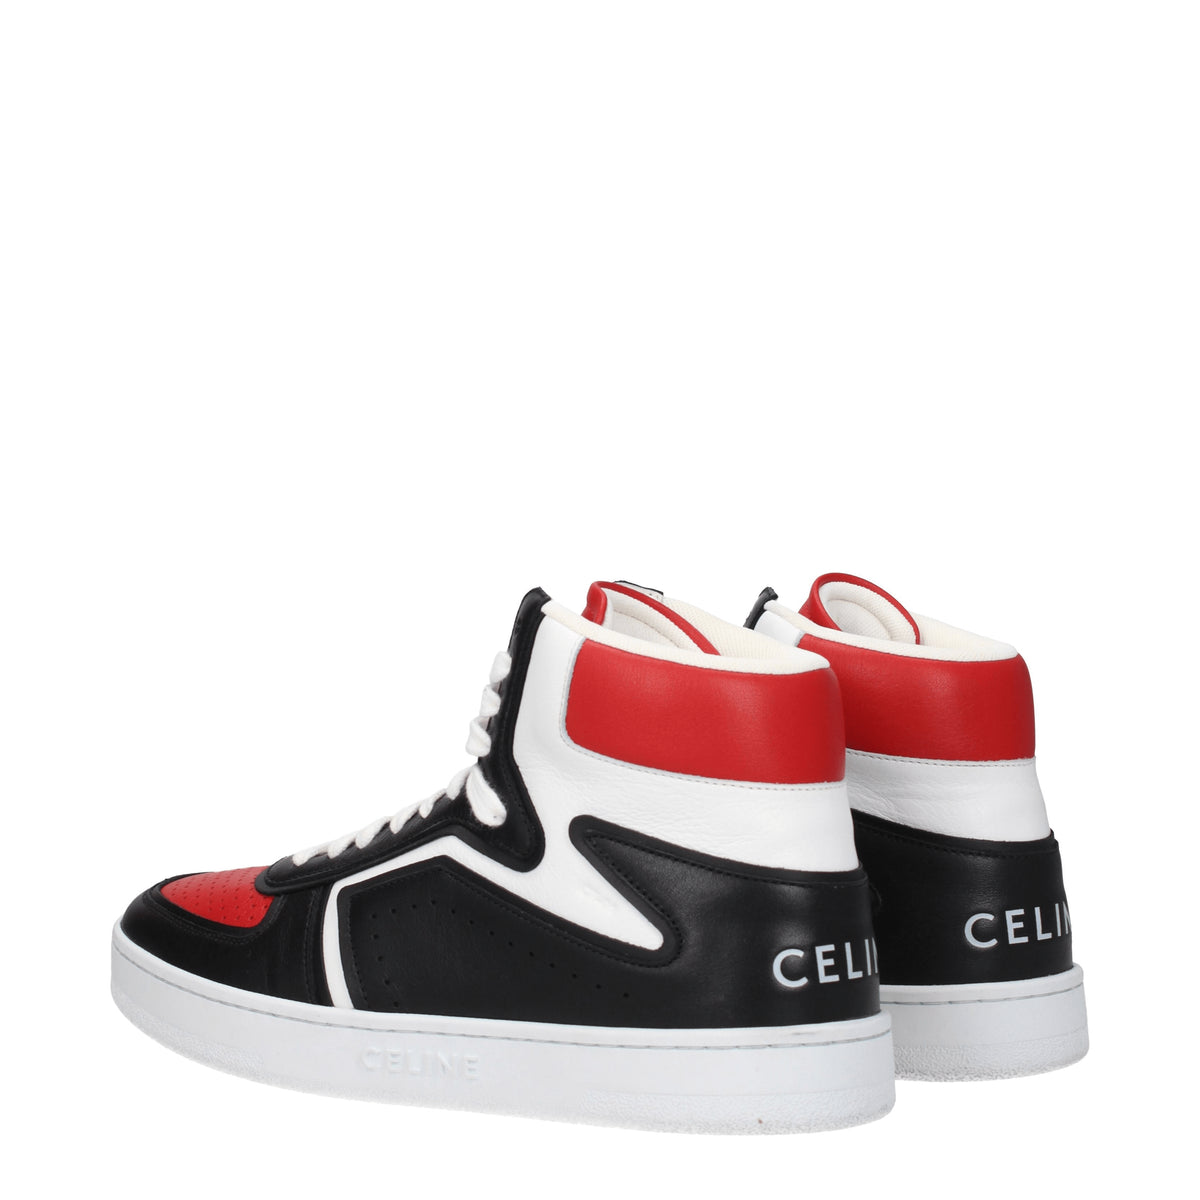 Celine Sneakers Uomo Pelle Nero Rosso